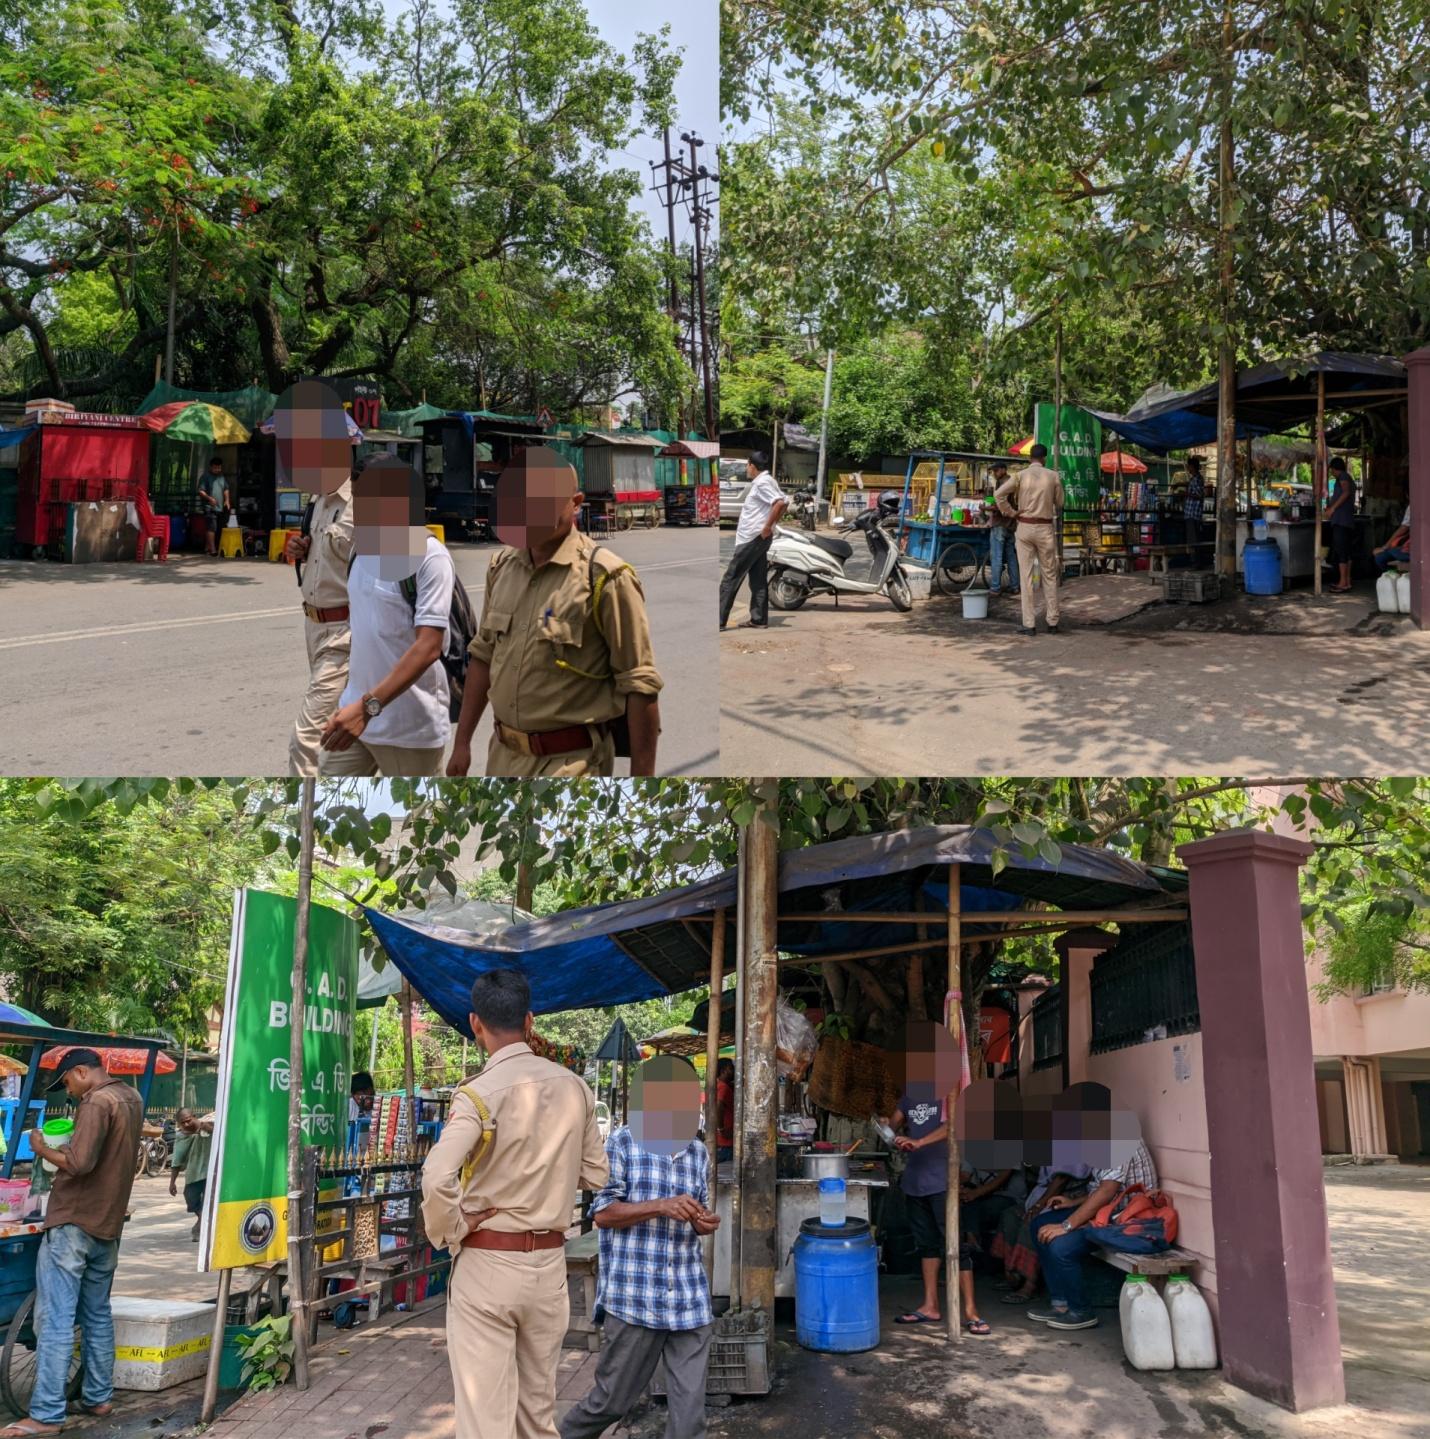 Policing of street-food vending sites